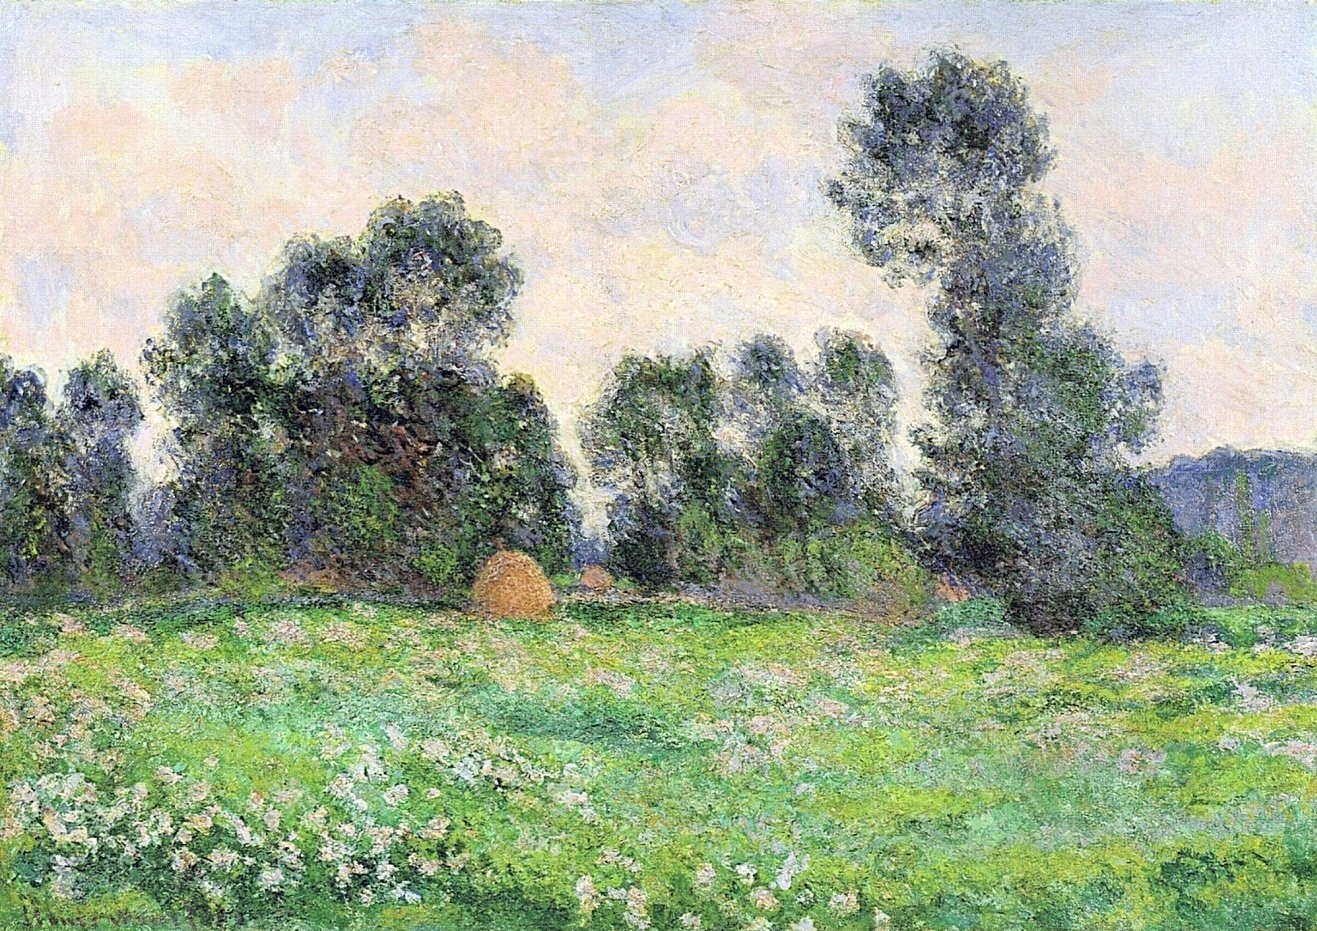 Claude+Monet-1840-1926 (295).jpg